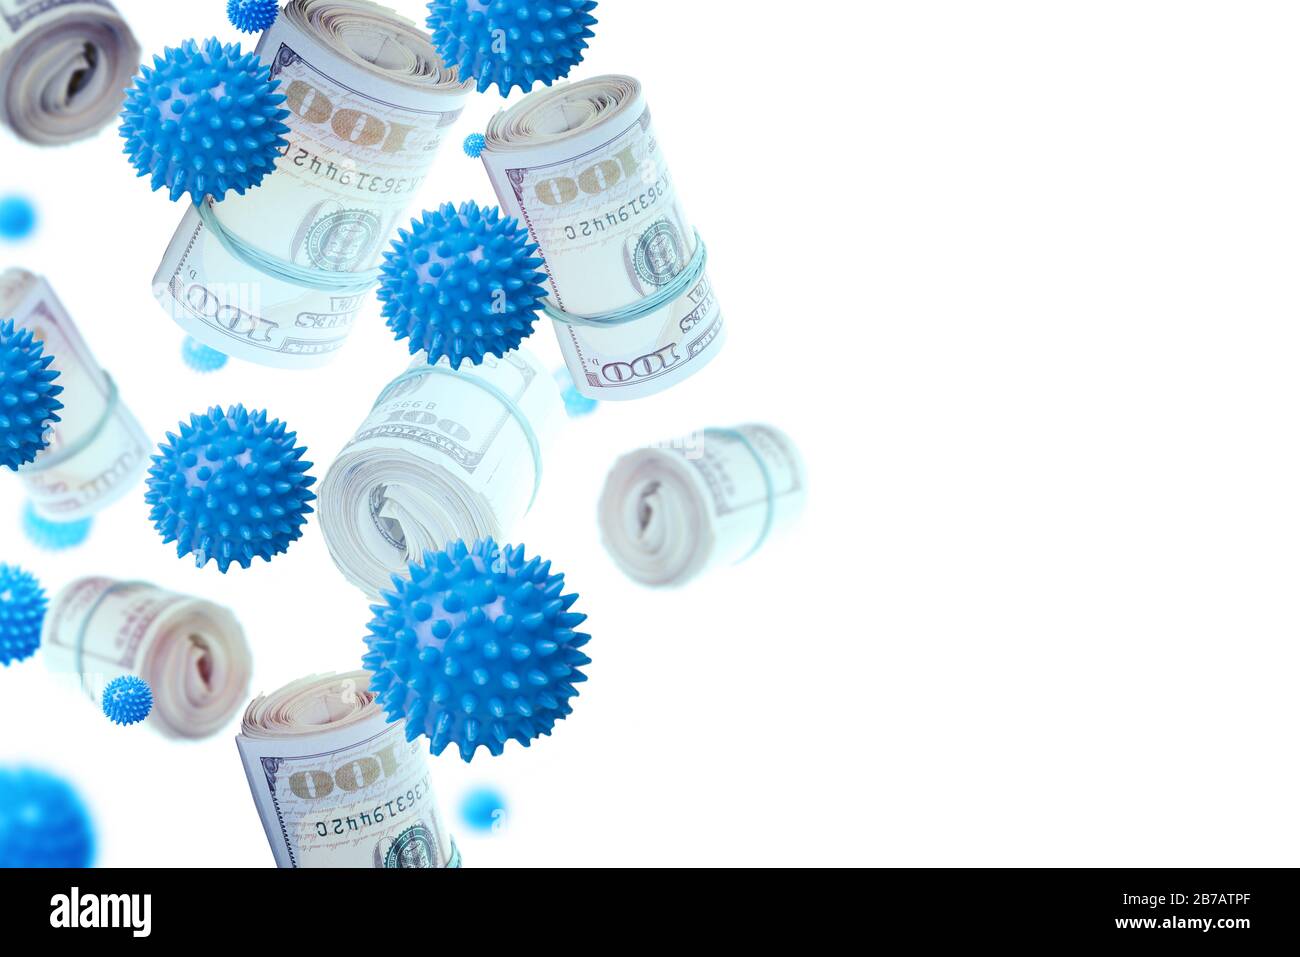 Business hype on coronavirus concept. Photo Collage of dollar bill rolls, and coronavirus miniatures flying in midair. Stock Photo